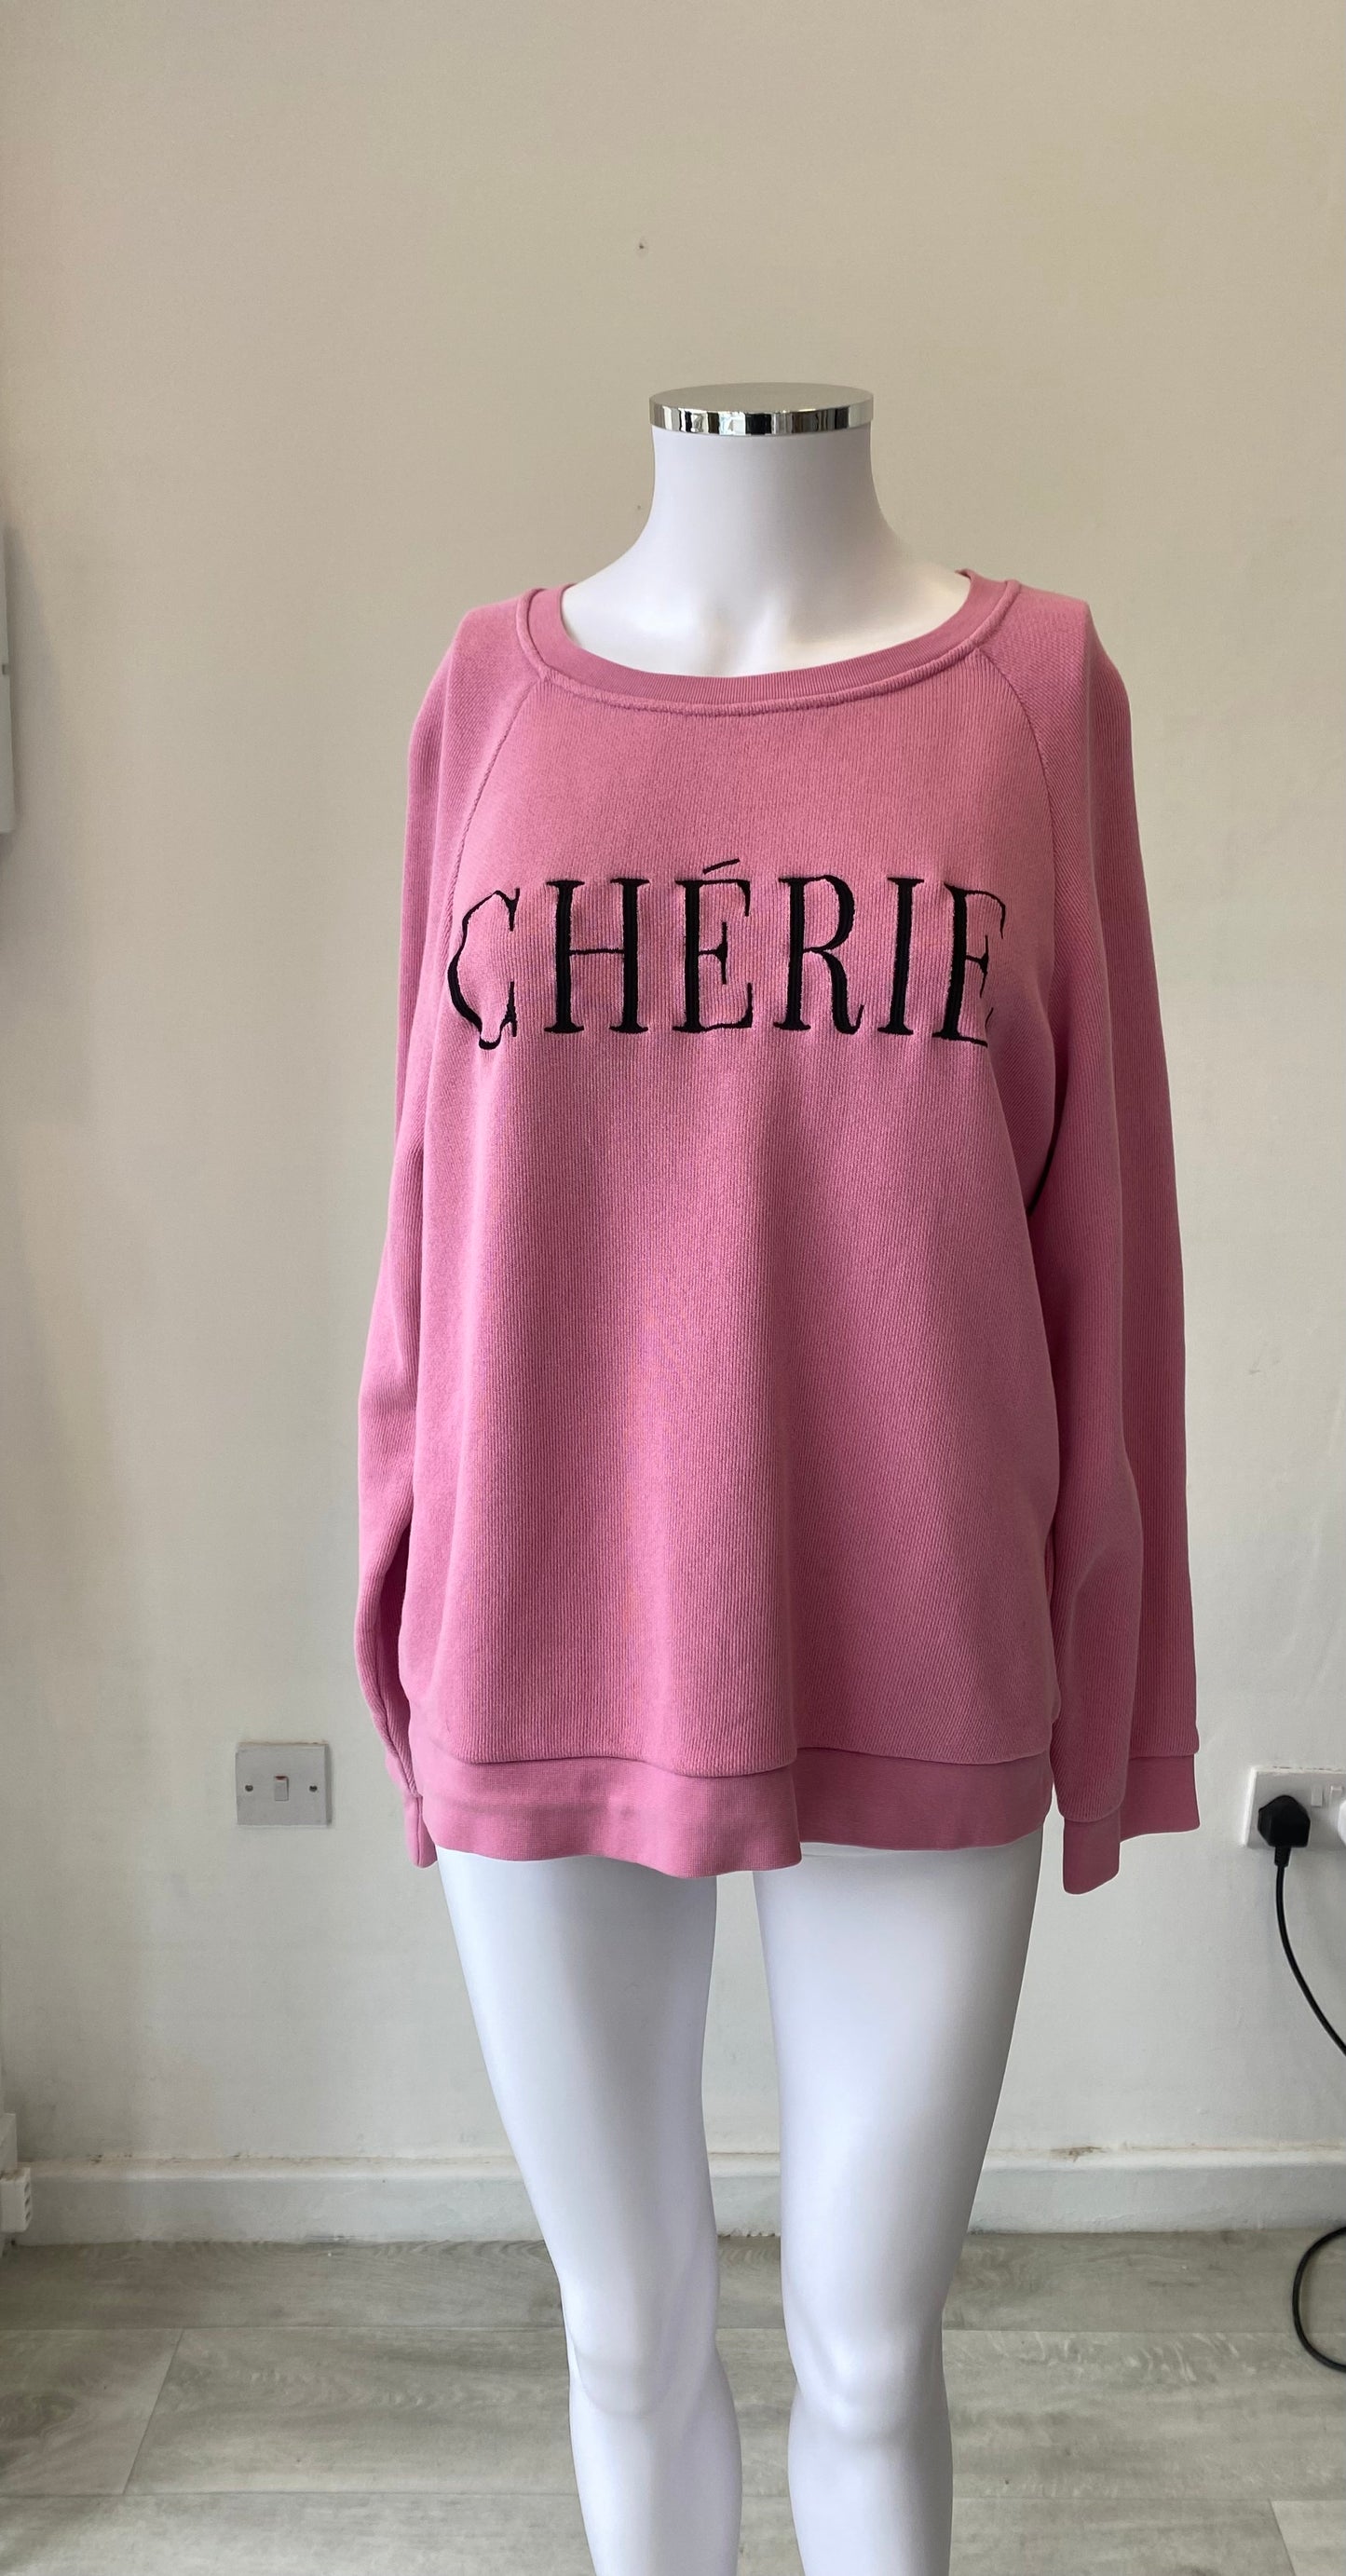 Whistles Pink Cherie Sweatshirt Size 10-12